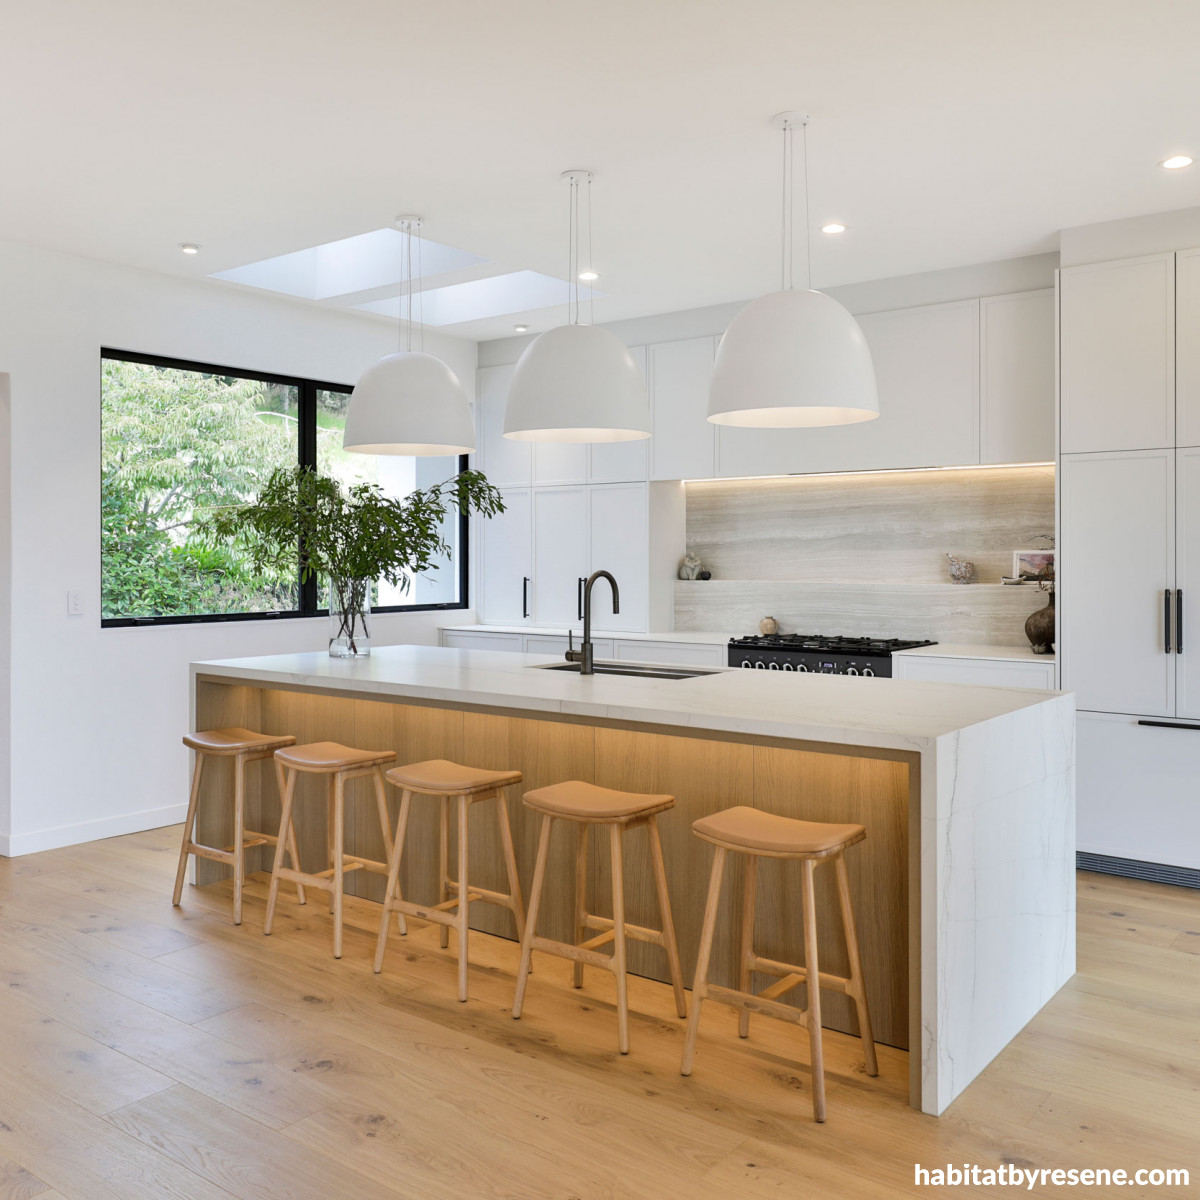 18 kitchen designers share their top kitchen design tips and Resene ...